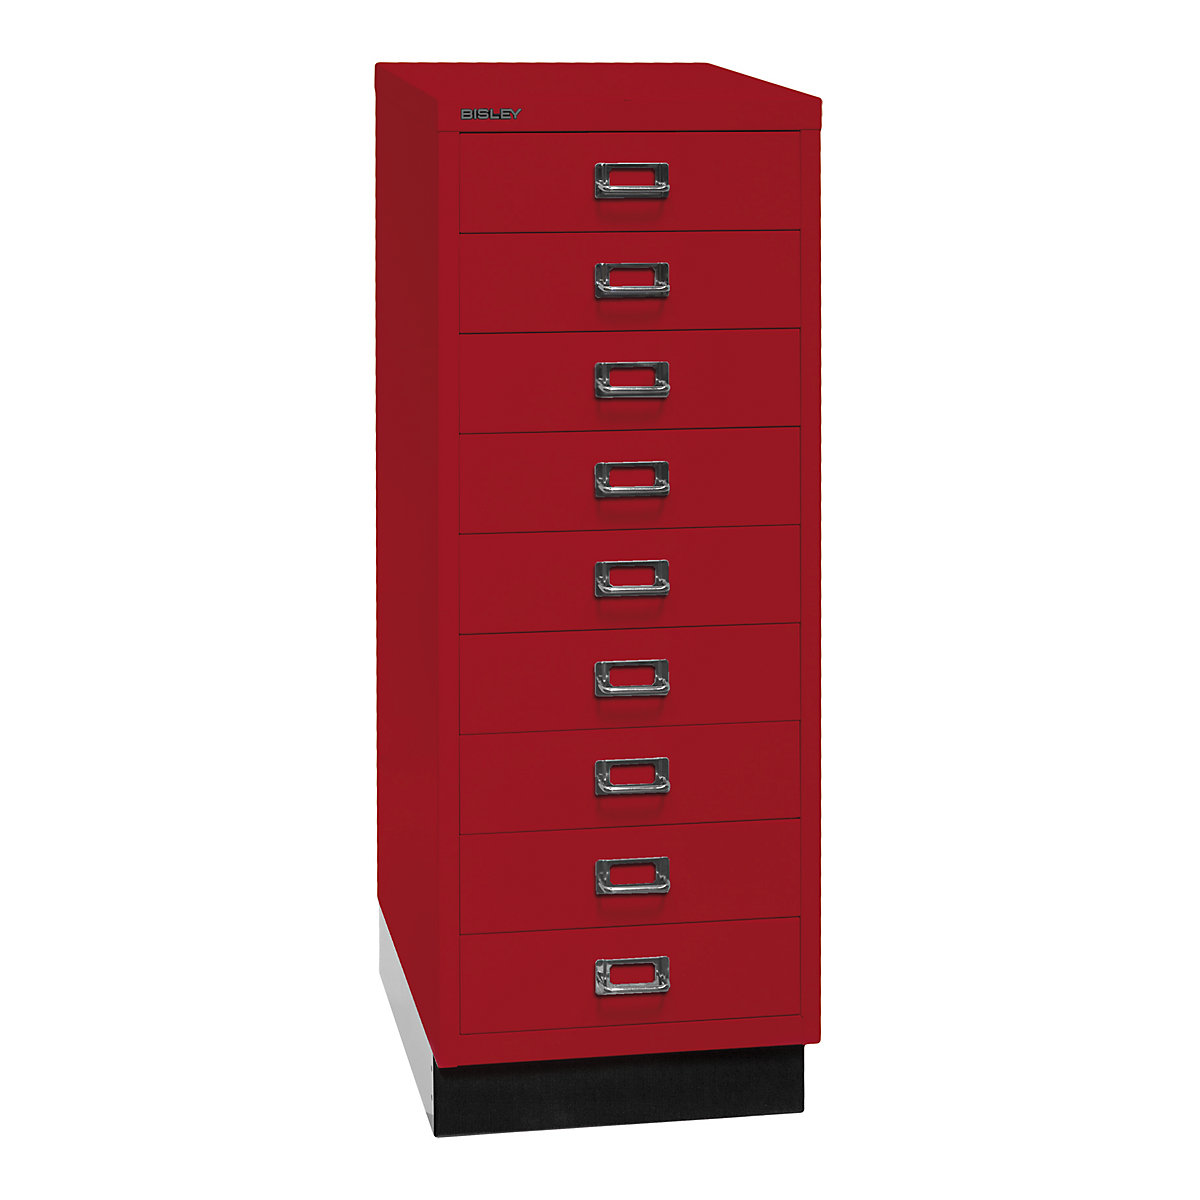 MultiDrawer™ série 39 – BISLEY, avec socle, format A3, 9 tiroirs, rouge cardinal, noir-4